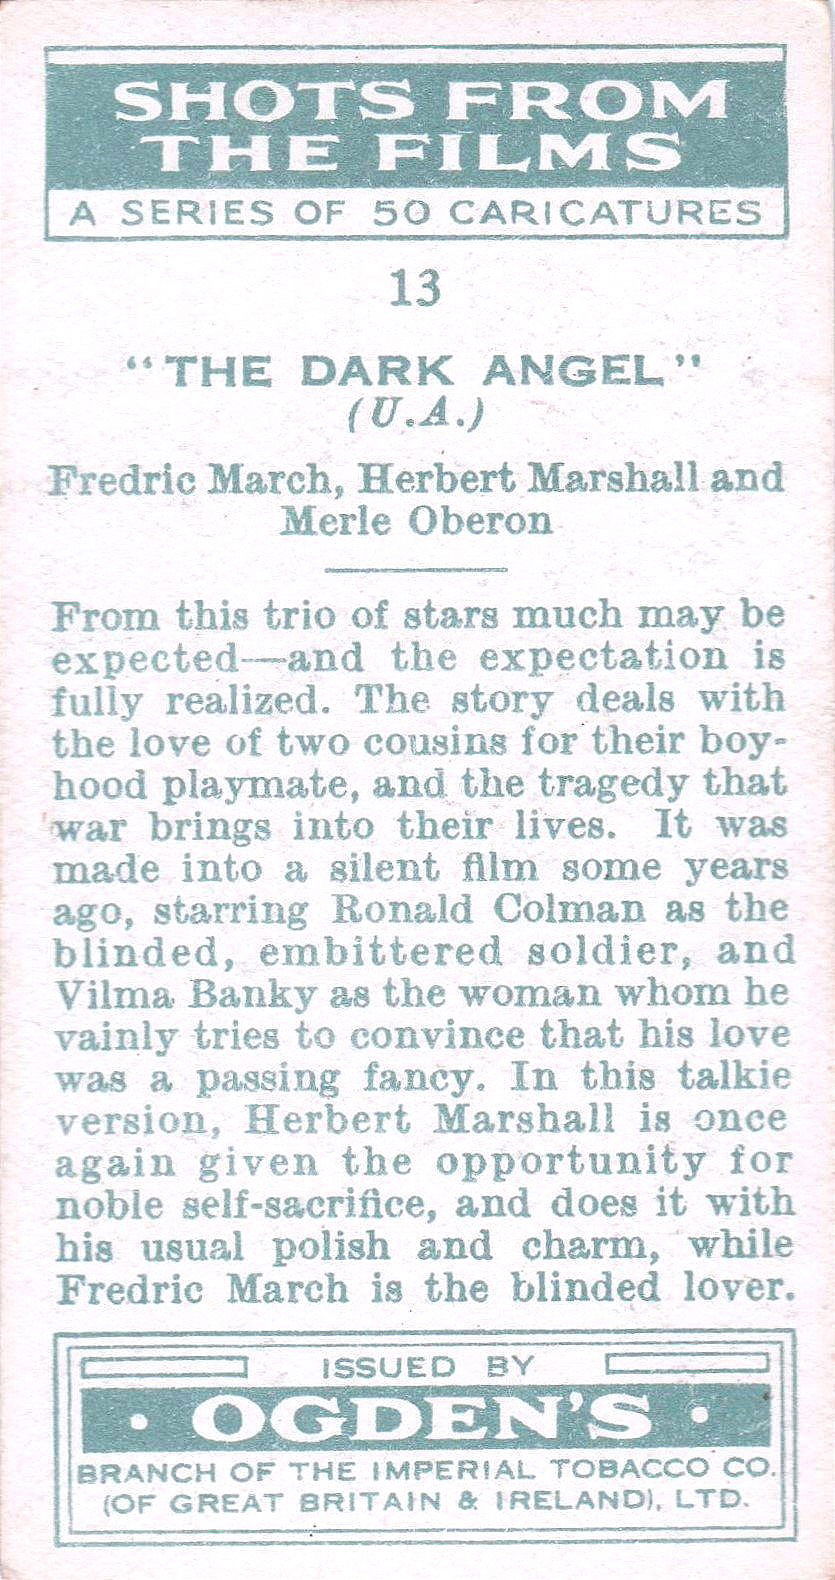 " THE DARK ANGEL " FREDRIC MARCH - HERBERT MARSHALL - MERLE OBERON